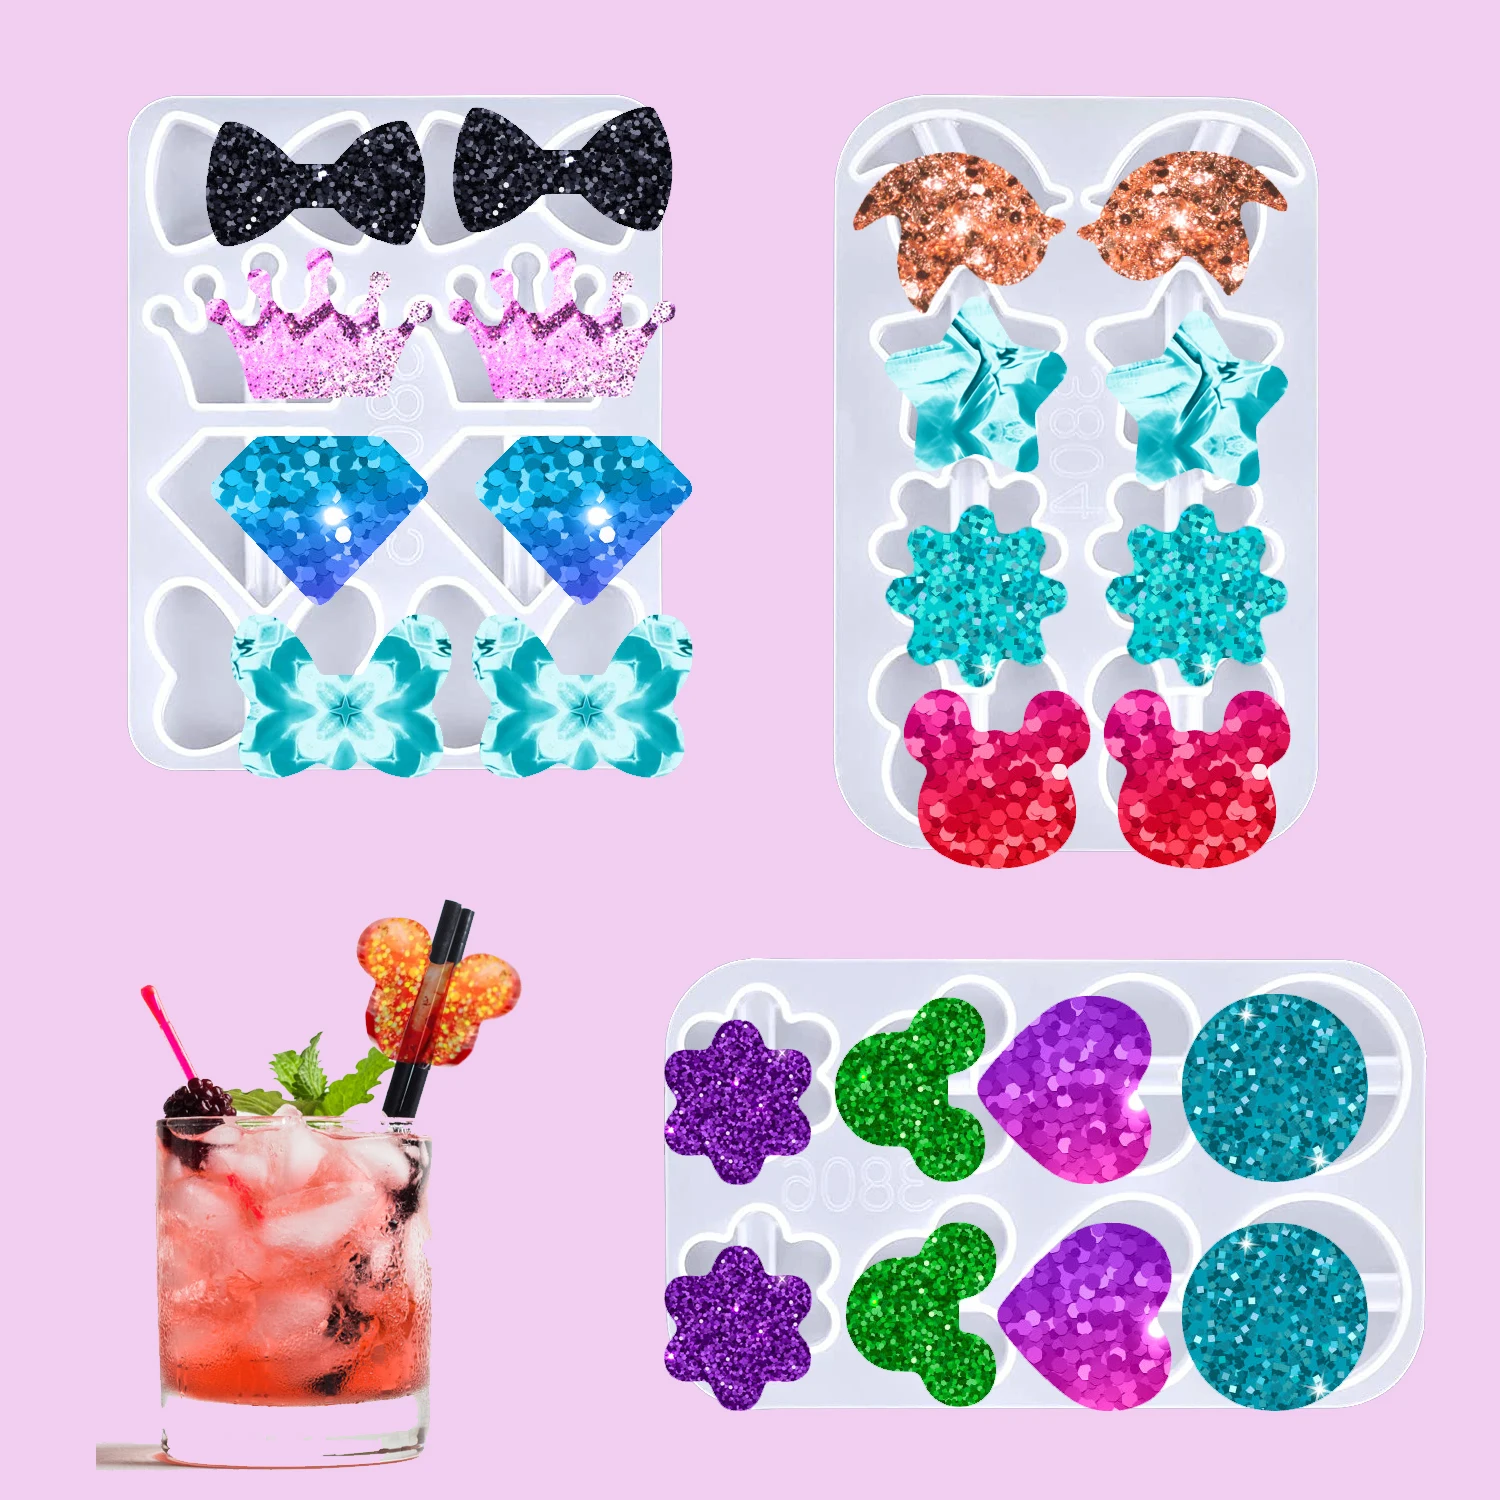 https://ae01.alicdn.com/kf/He9a26d5a7fe64d4f8e2d2f969635e4c6u/Straw-Topper-DIY-Straw-Topper-Mold-Resin-Mold-Flower-Butterfly-Beach-Party-Decor-Epoxy-Resin-Art.jpg